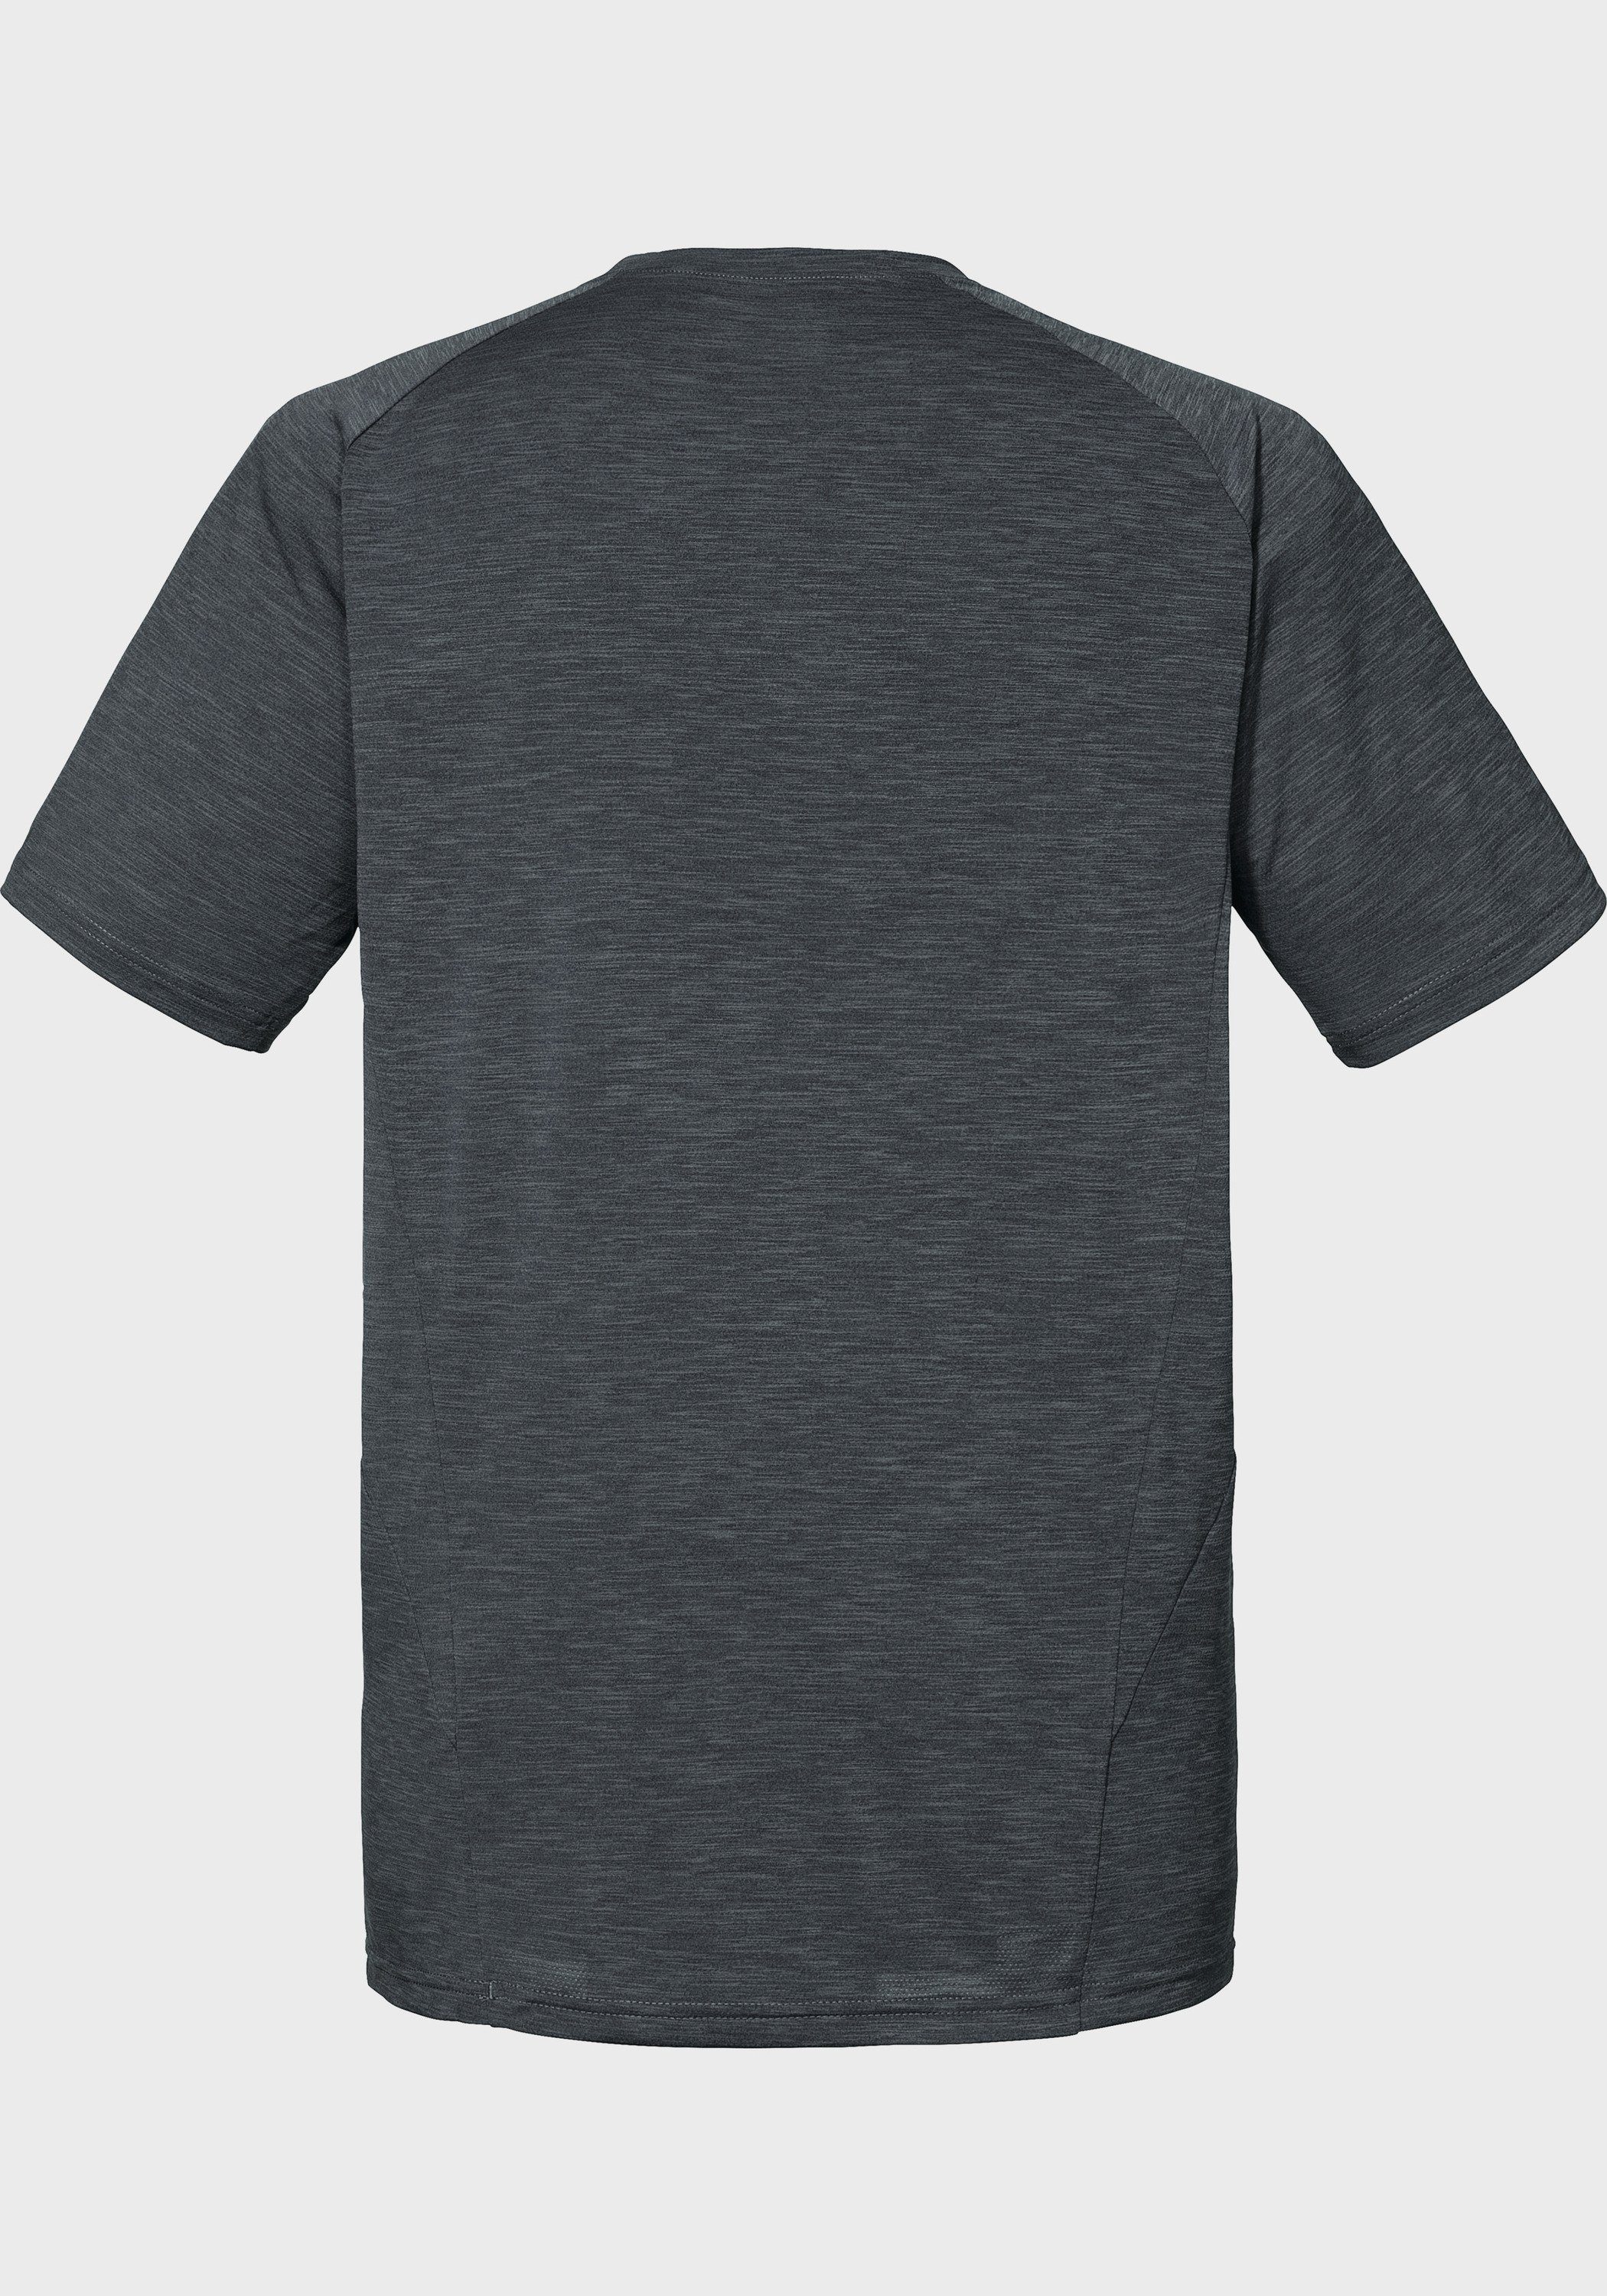 Schöffel Funktionsshirt T Shirt grau M Boise2